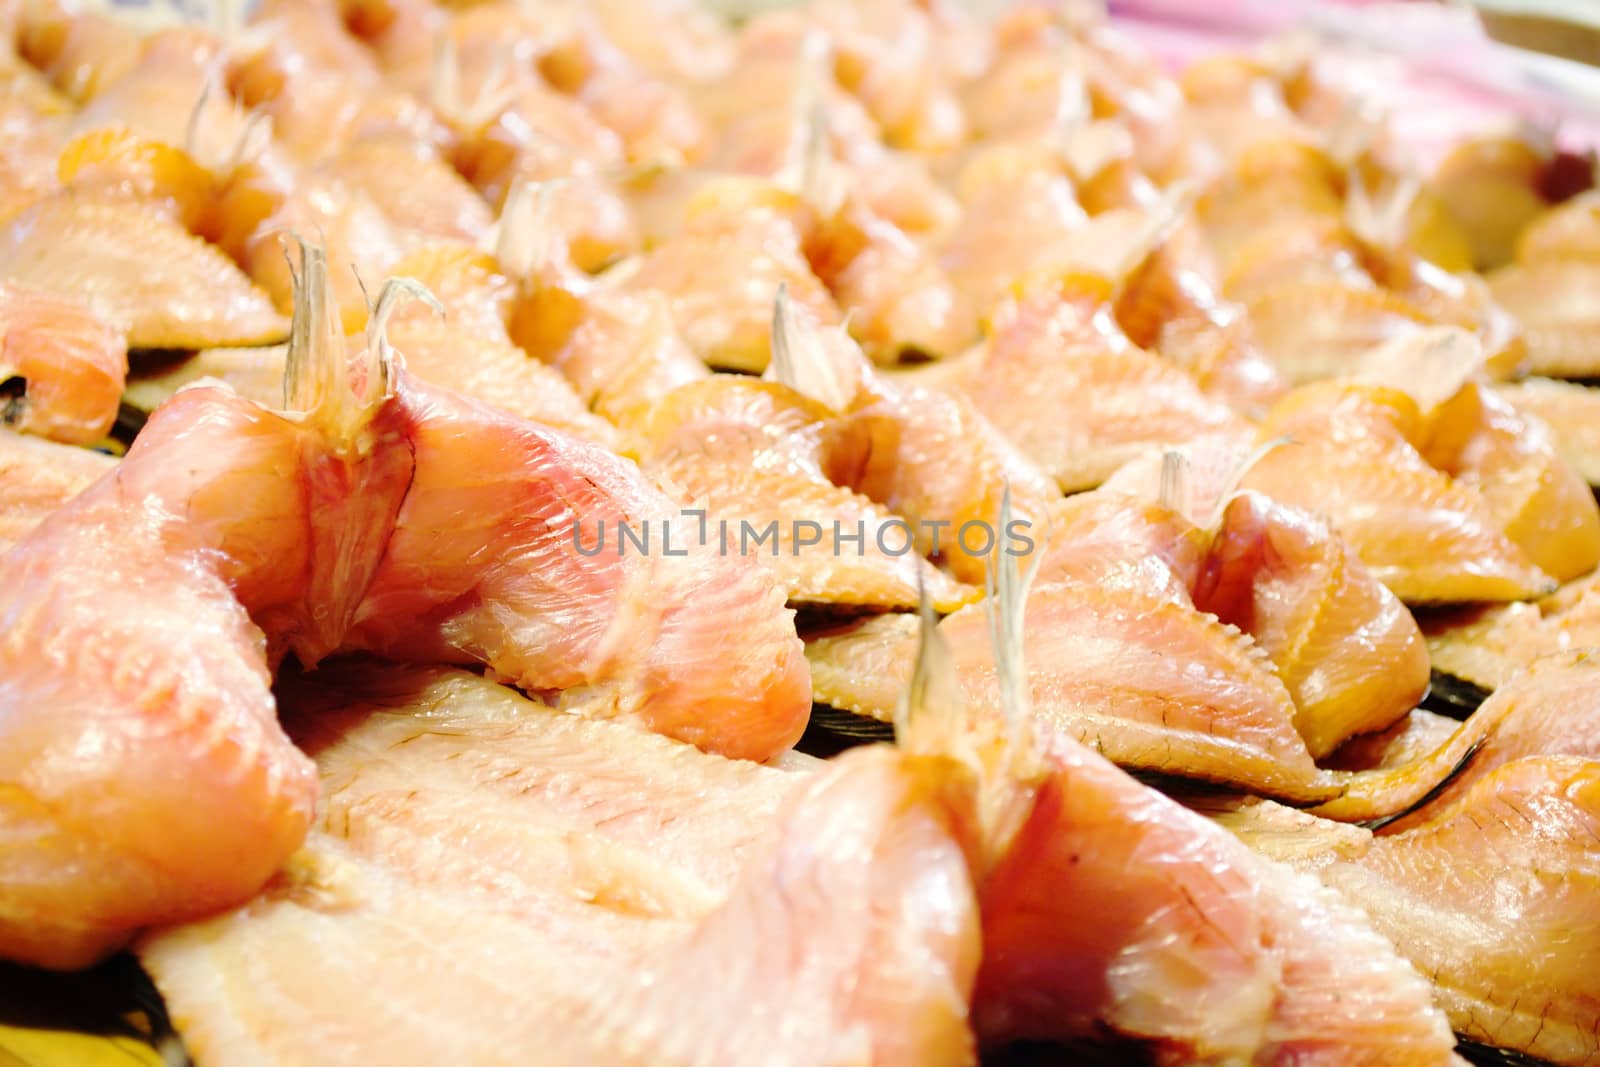 Dried fish by apichart